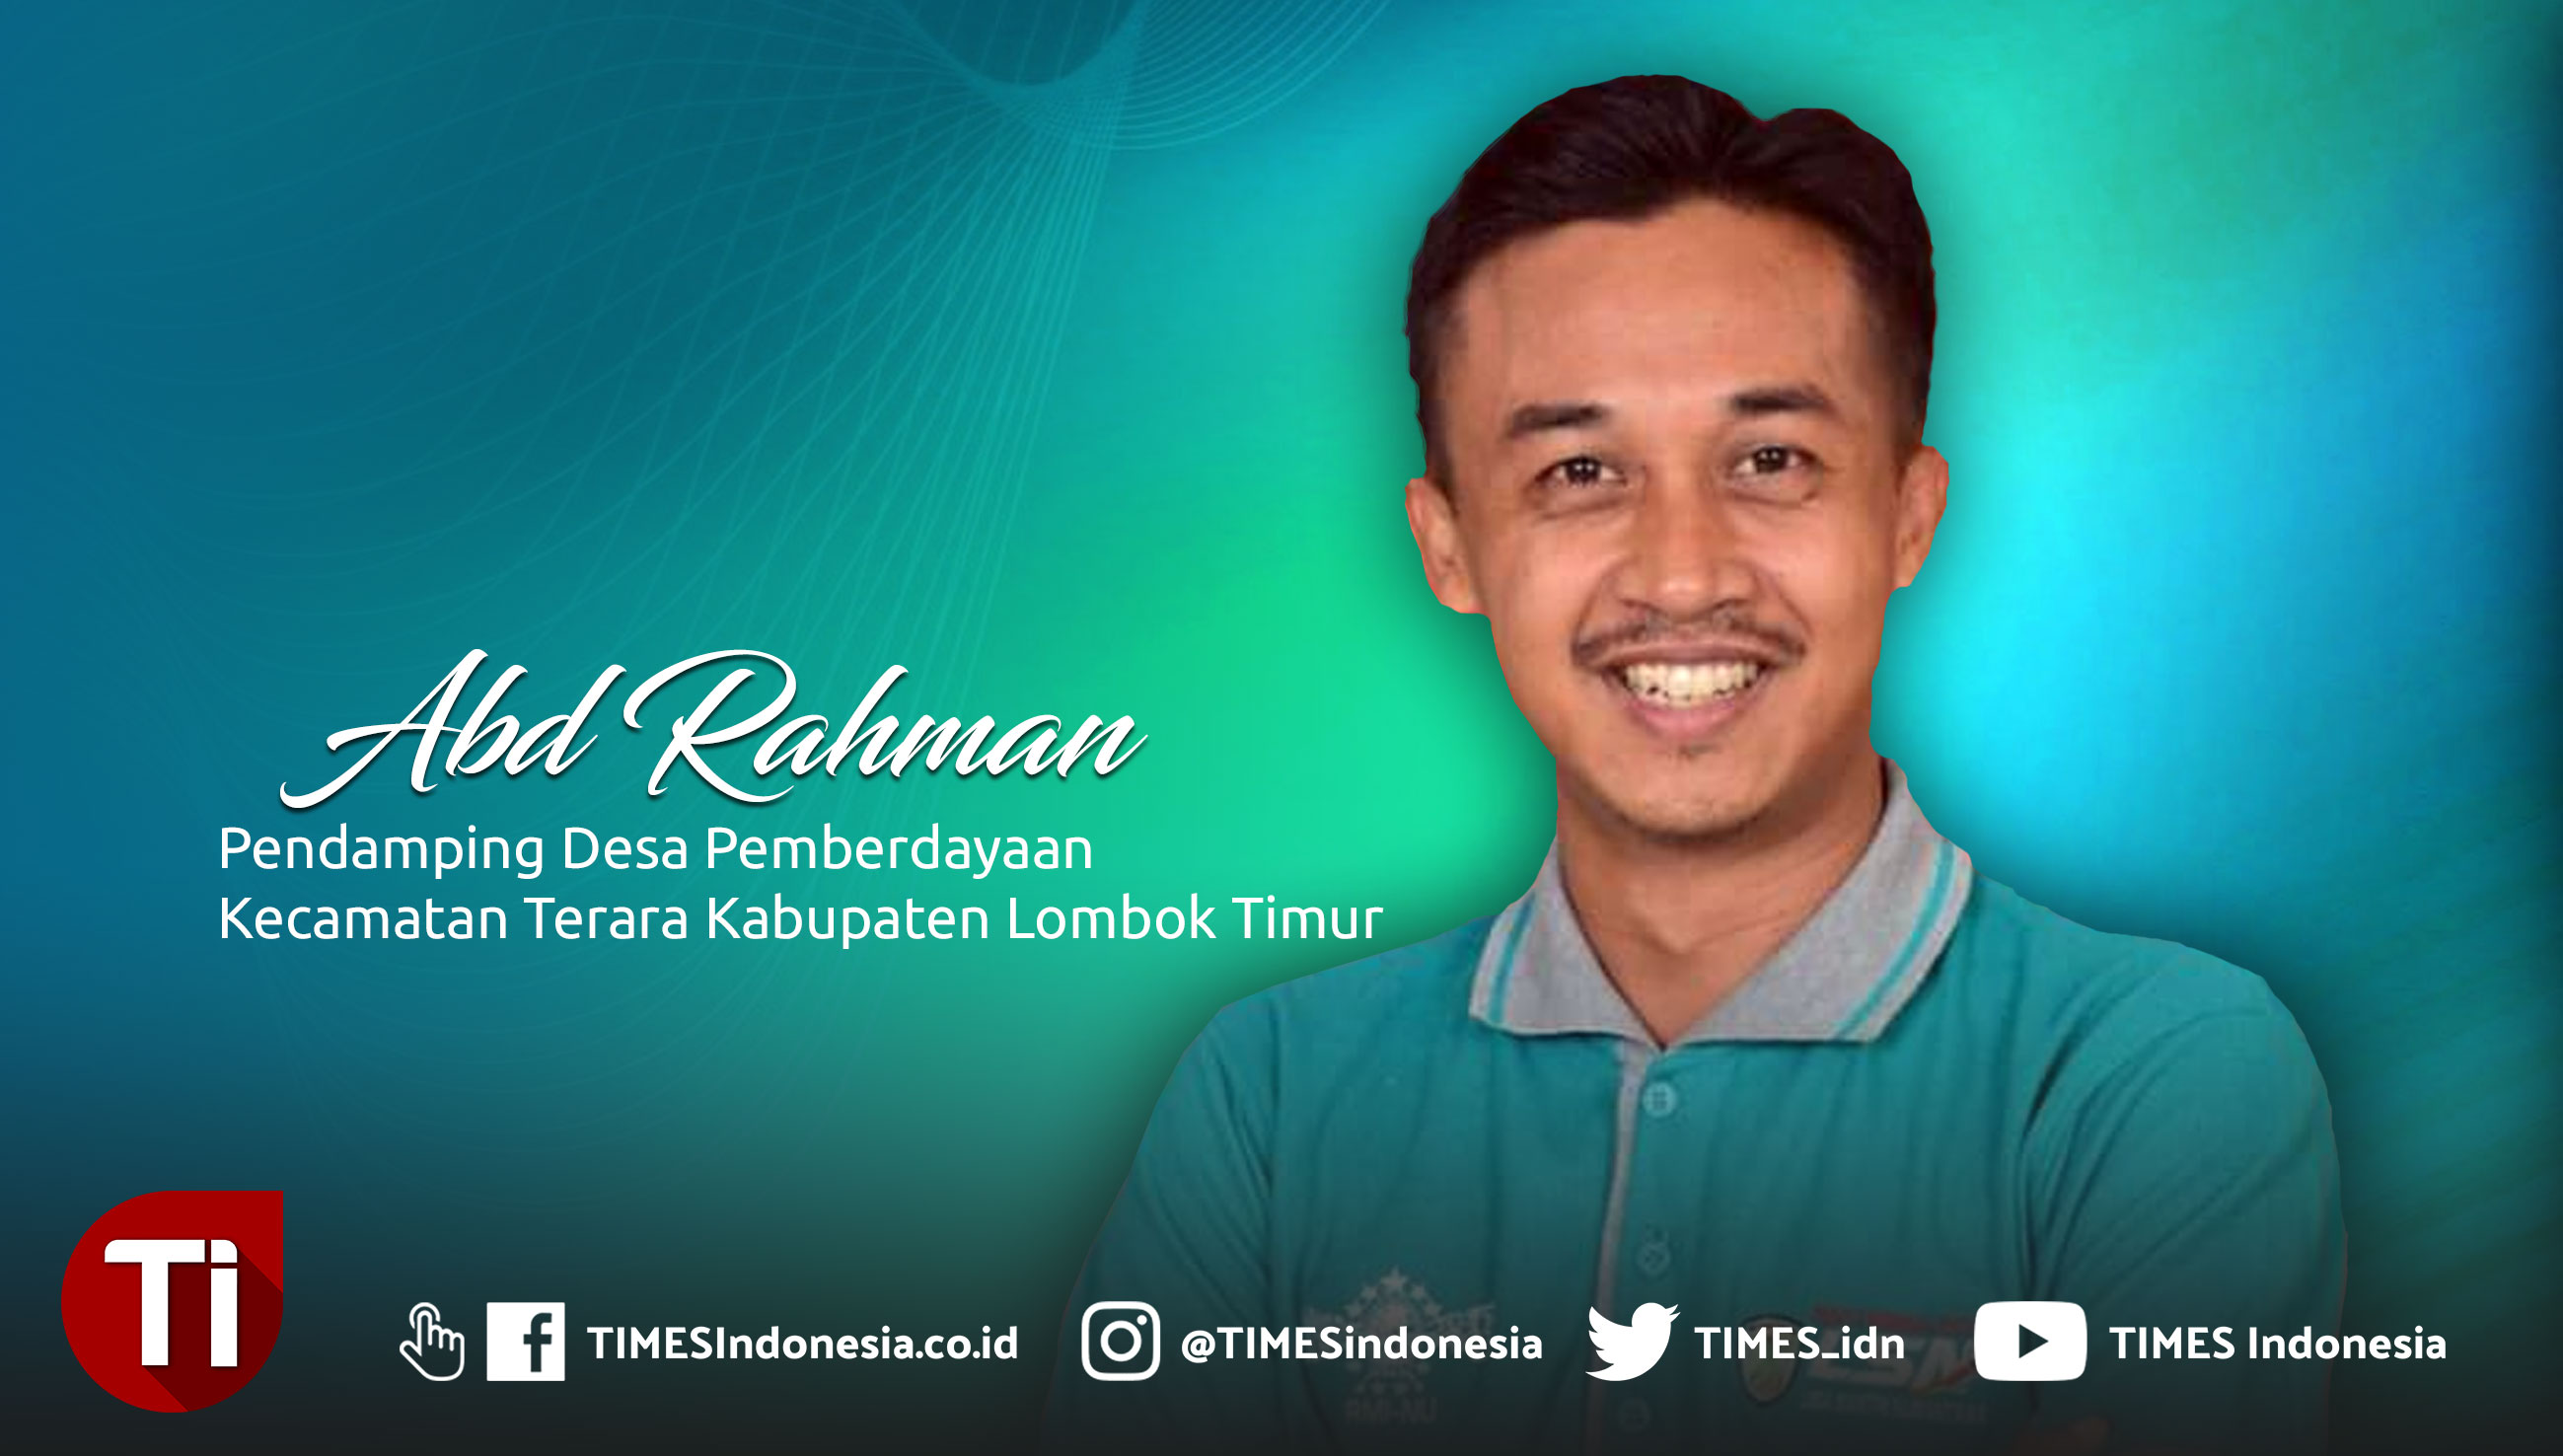 Pendamping Desa Pemberdayaan Kecamatan Terara Kabupaten Lombok Timur Abd Rahman. (Foto: TIMES Indonesia)